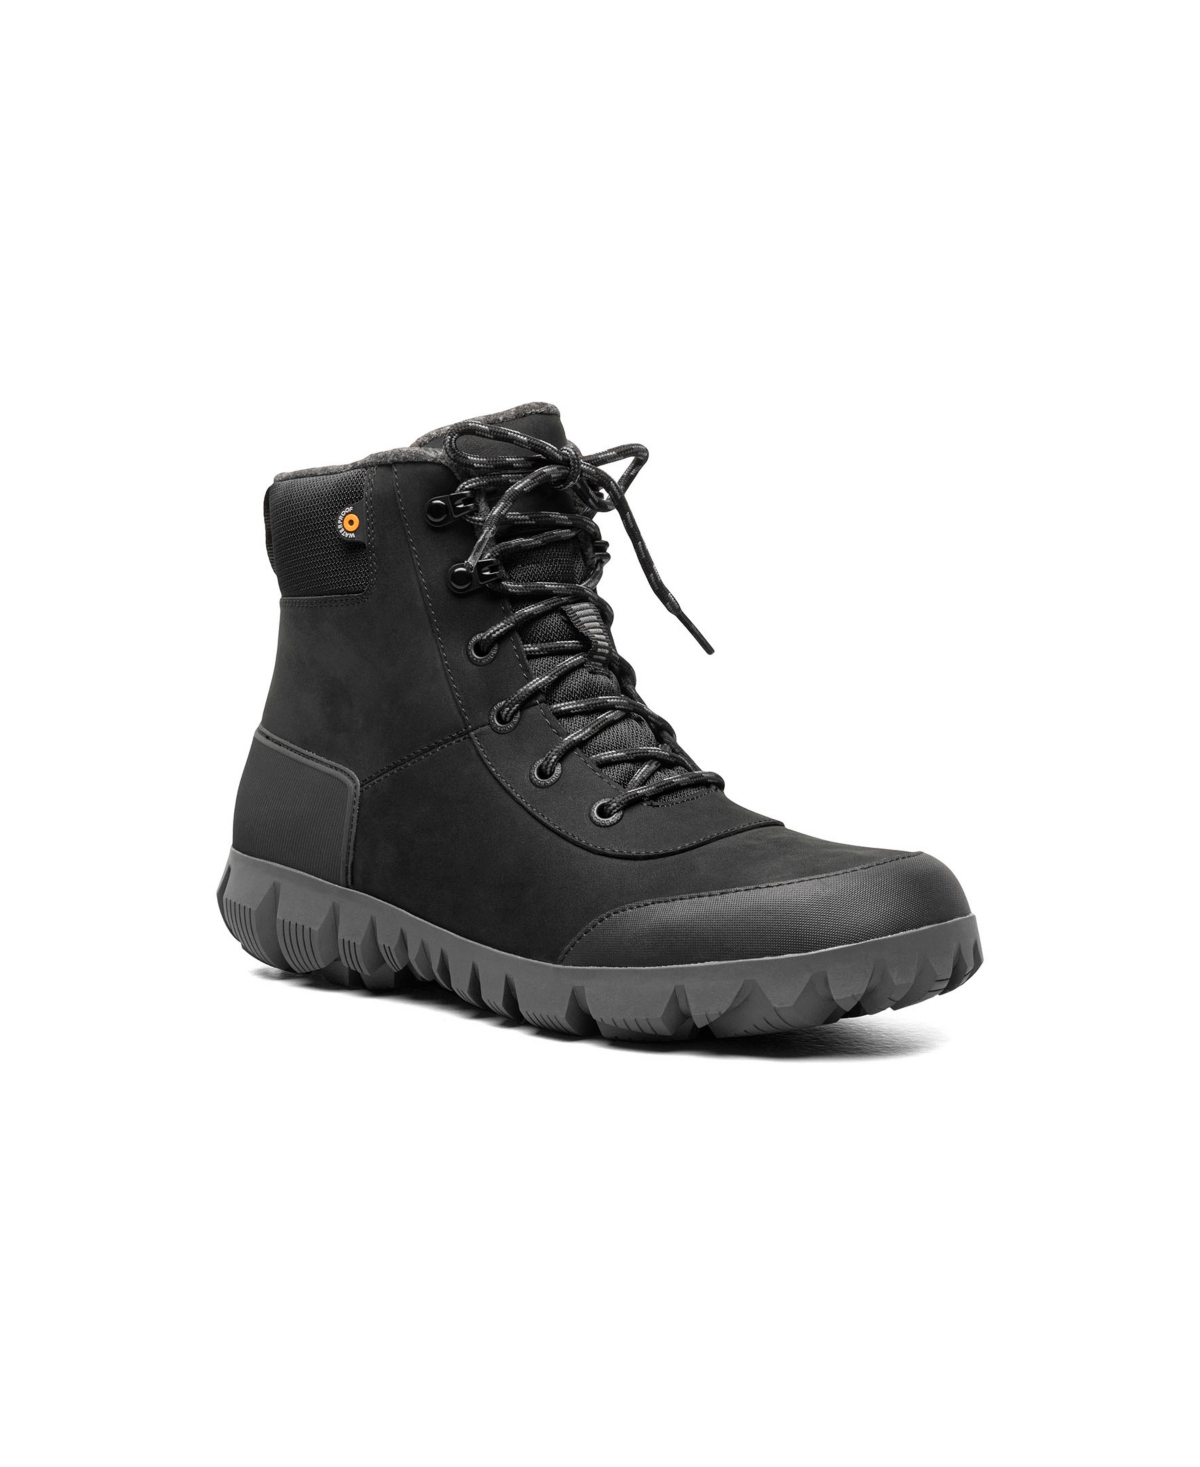 Men's Arcata Urban Leather Mid Slip-Resistant Boot - Black